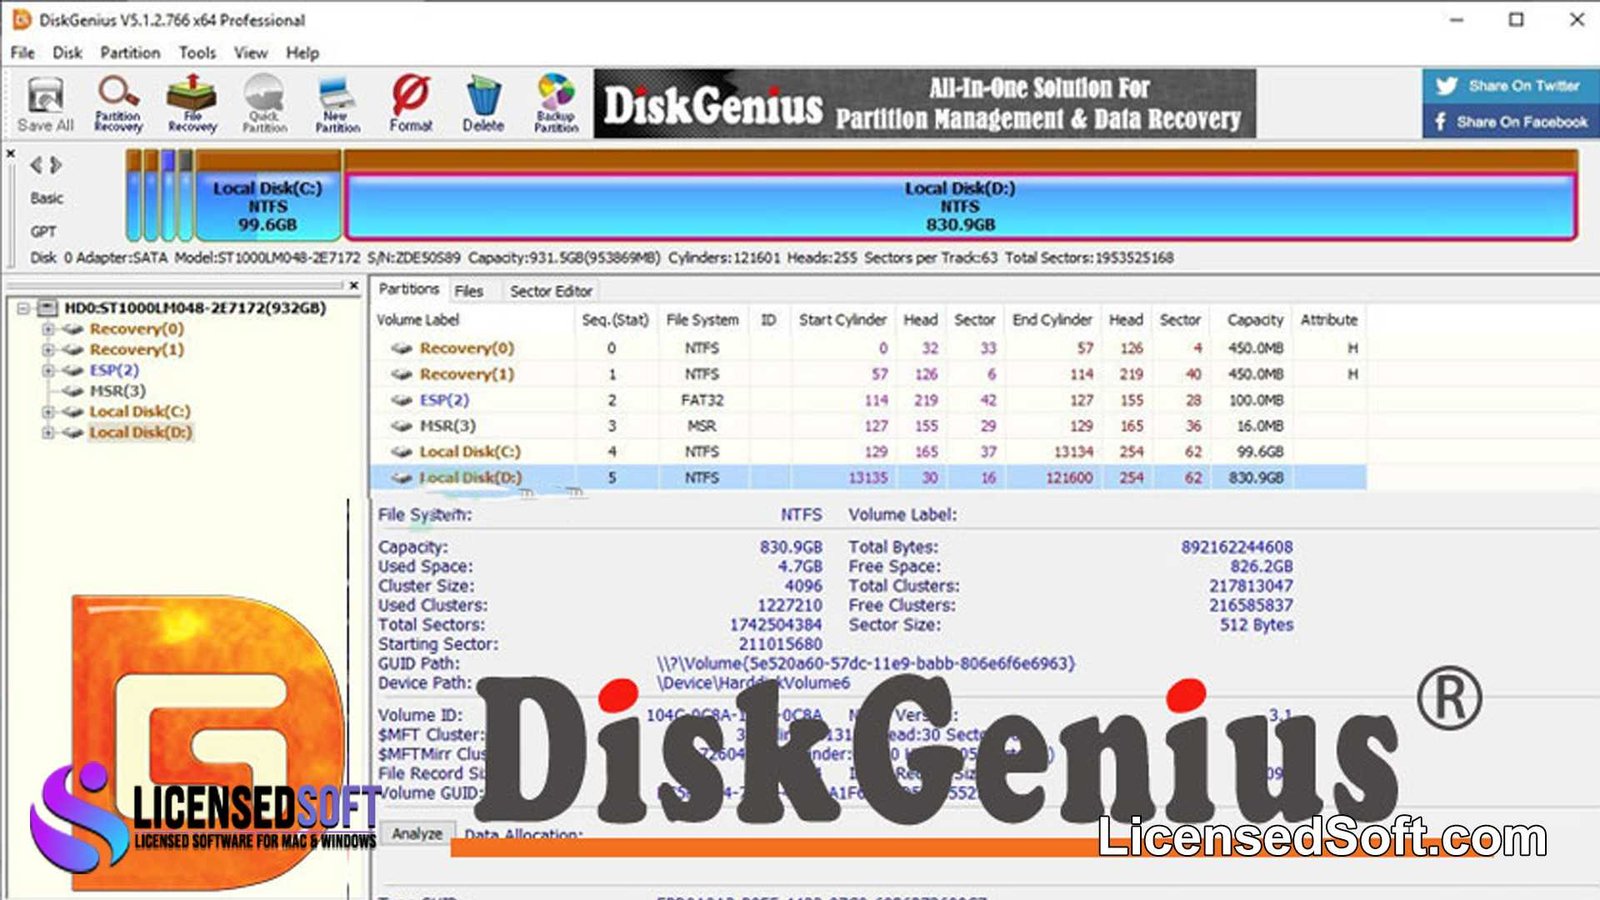 DiskGenius Professional 5.5 Perpetual License By LicensedSoft